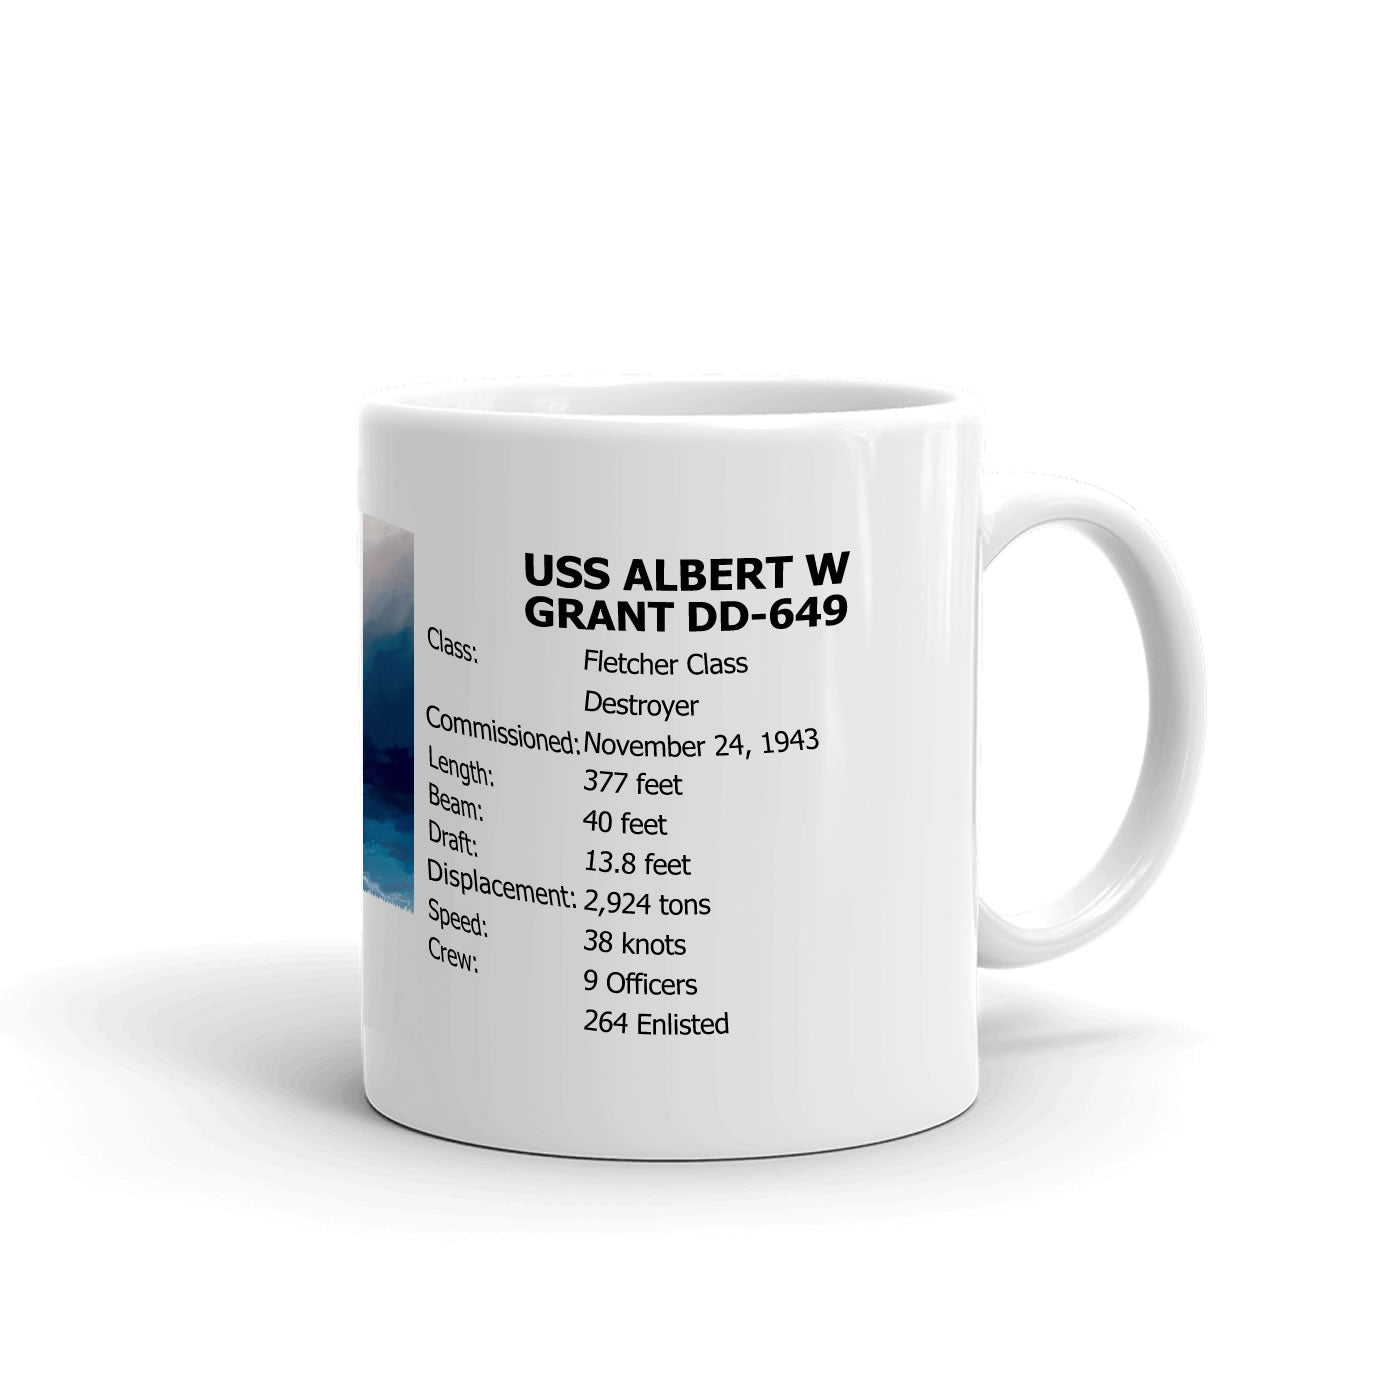 USS Albert W Grant DD-649 Coffee Cup Mug Right Handle